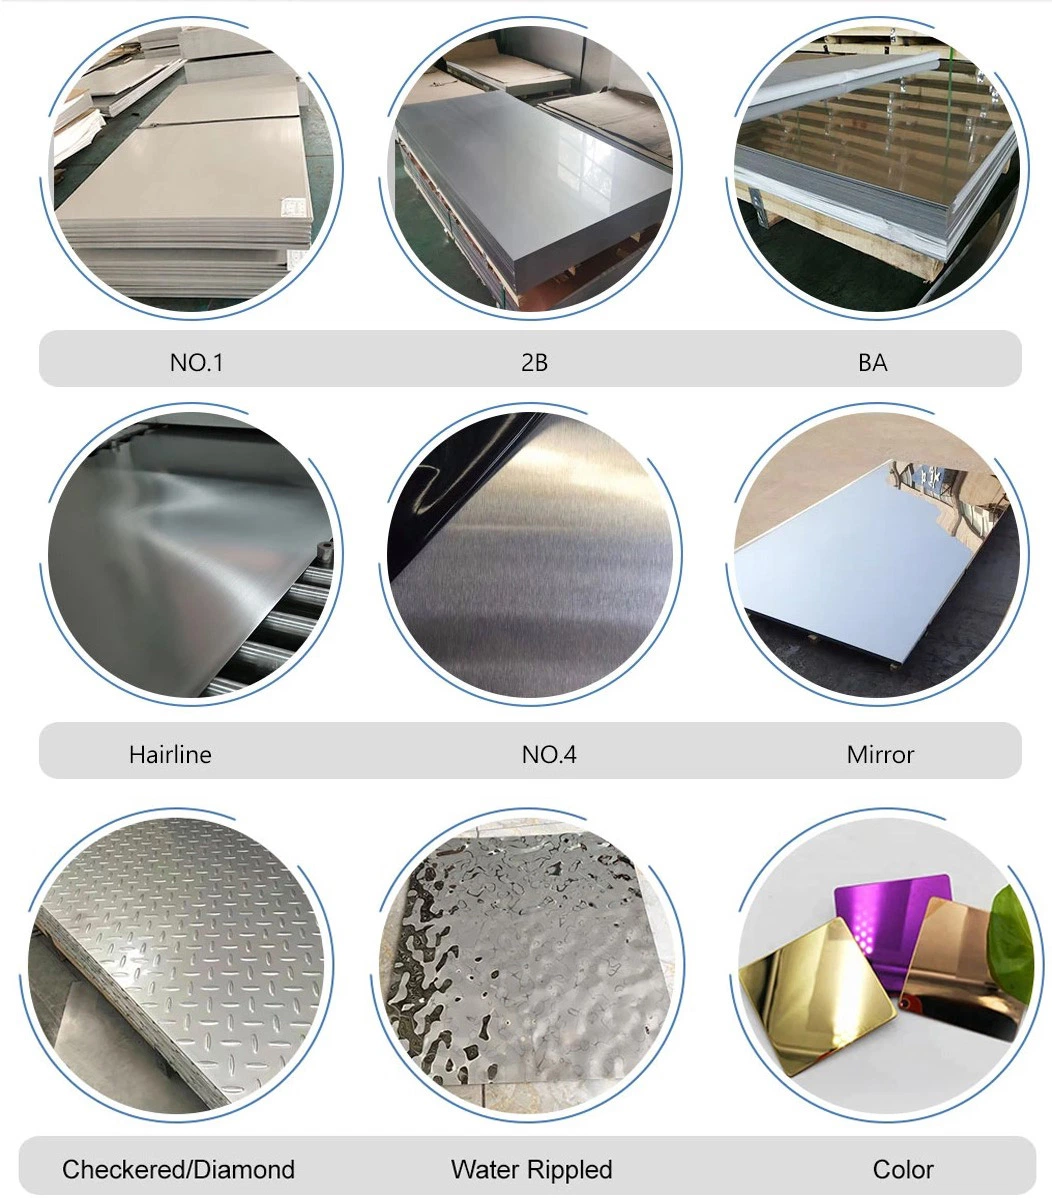 430 Stainless Steel Ba Sheet Tisco 430 304 Stainless Coil Sheet Plate